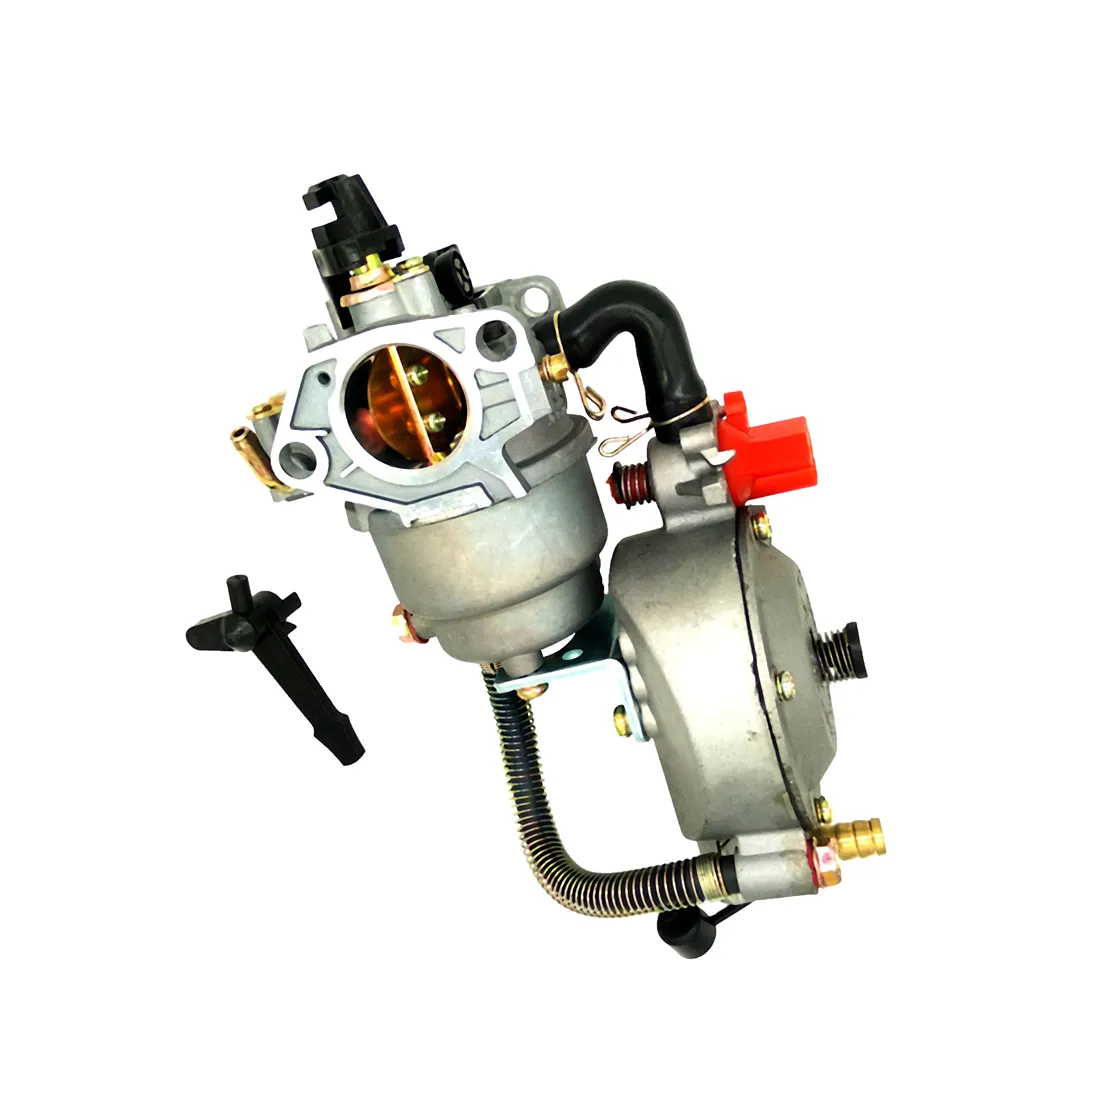 Carburetor Dual Fuel Conversion Kit For Honda GX390 GX340 Water Pump LPG / CNG 4.5 KW to 10 KW Generators